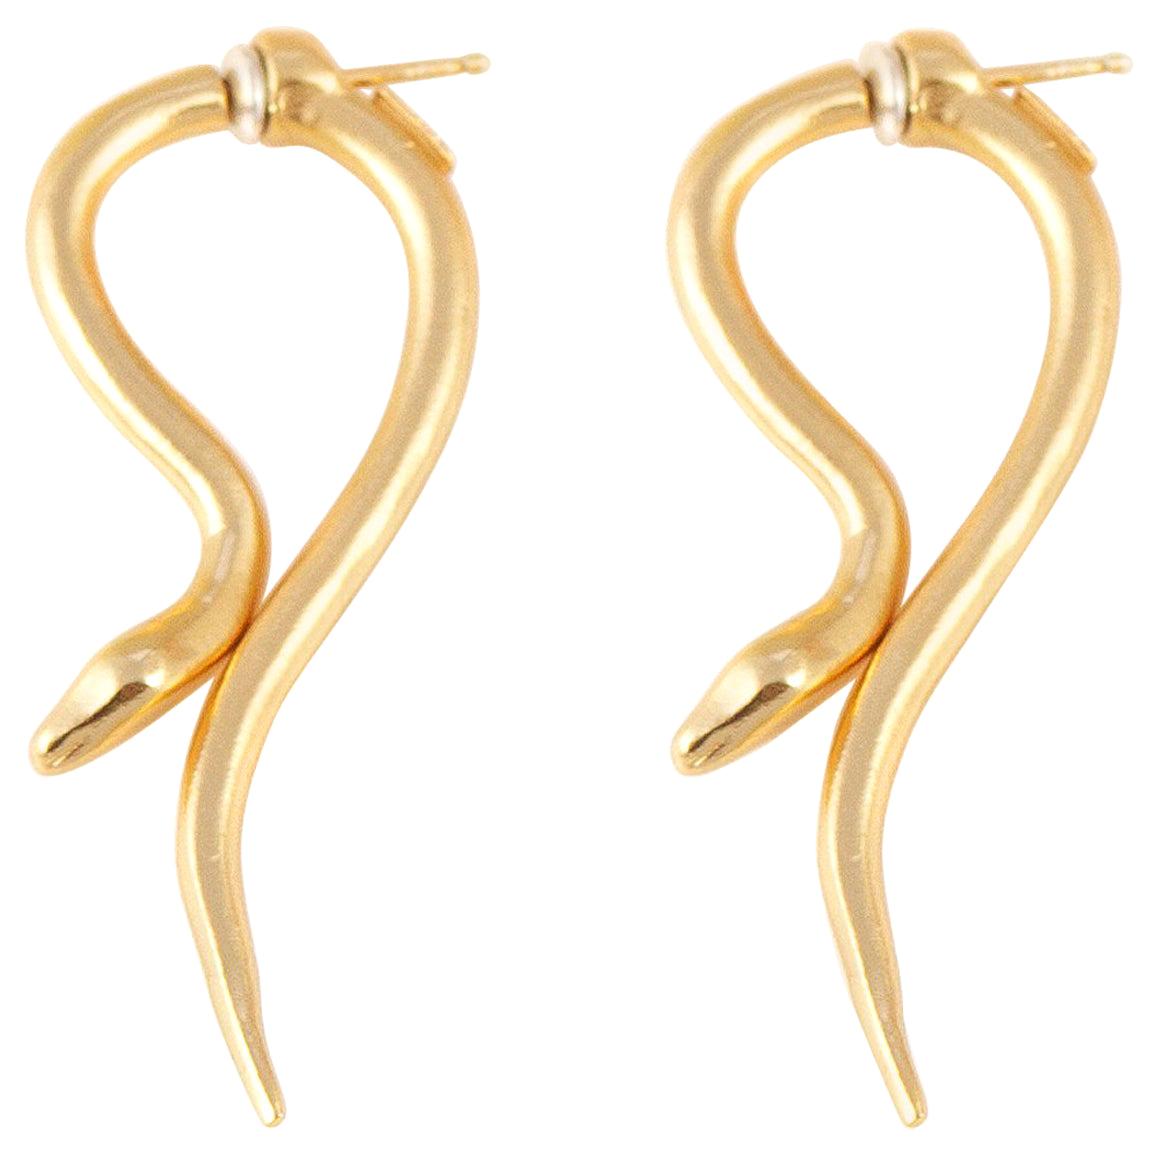 Giulia Barela Hooked Earrings Gold Plated Bronze